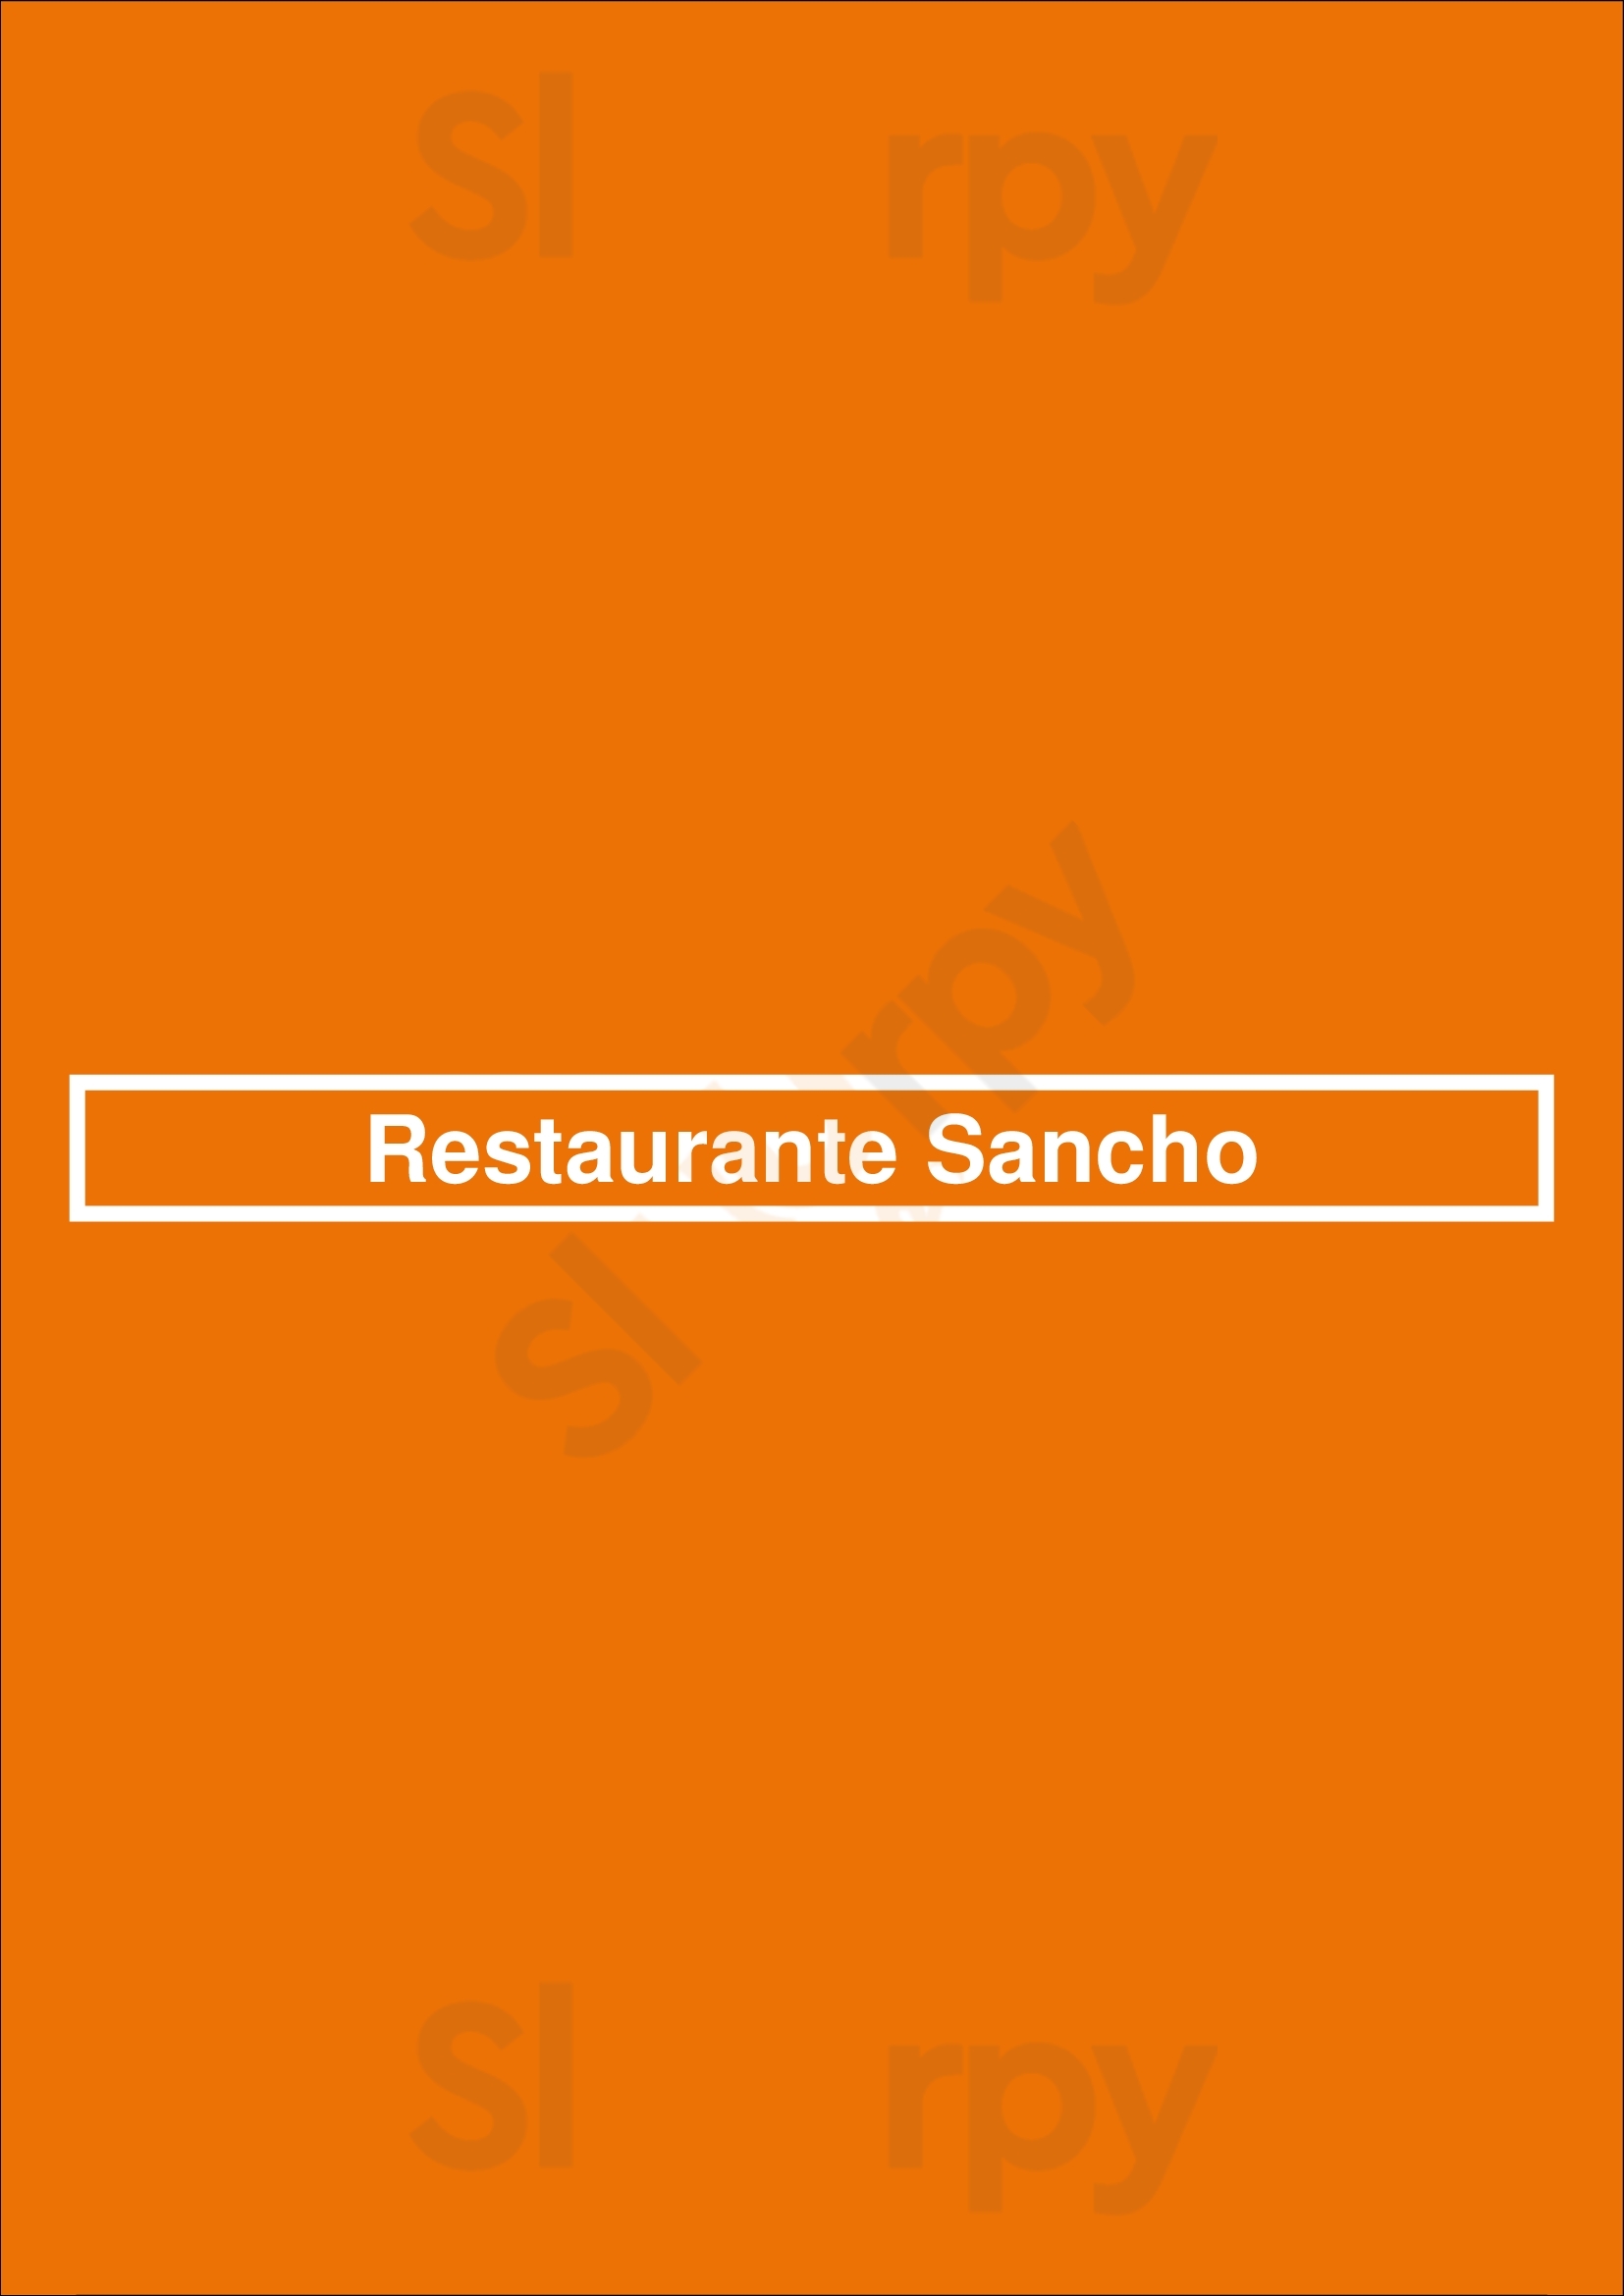 Restaurante Sancho Lisboa Menu - 1